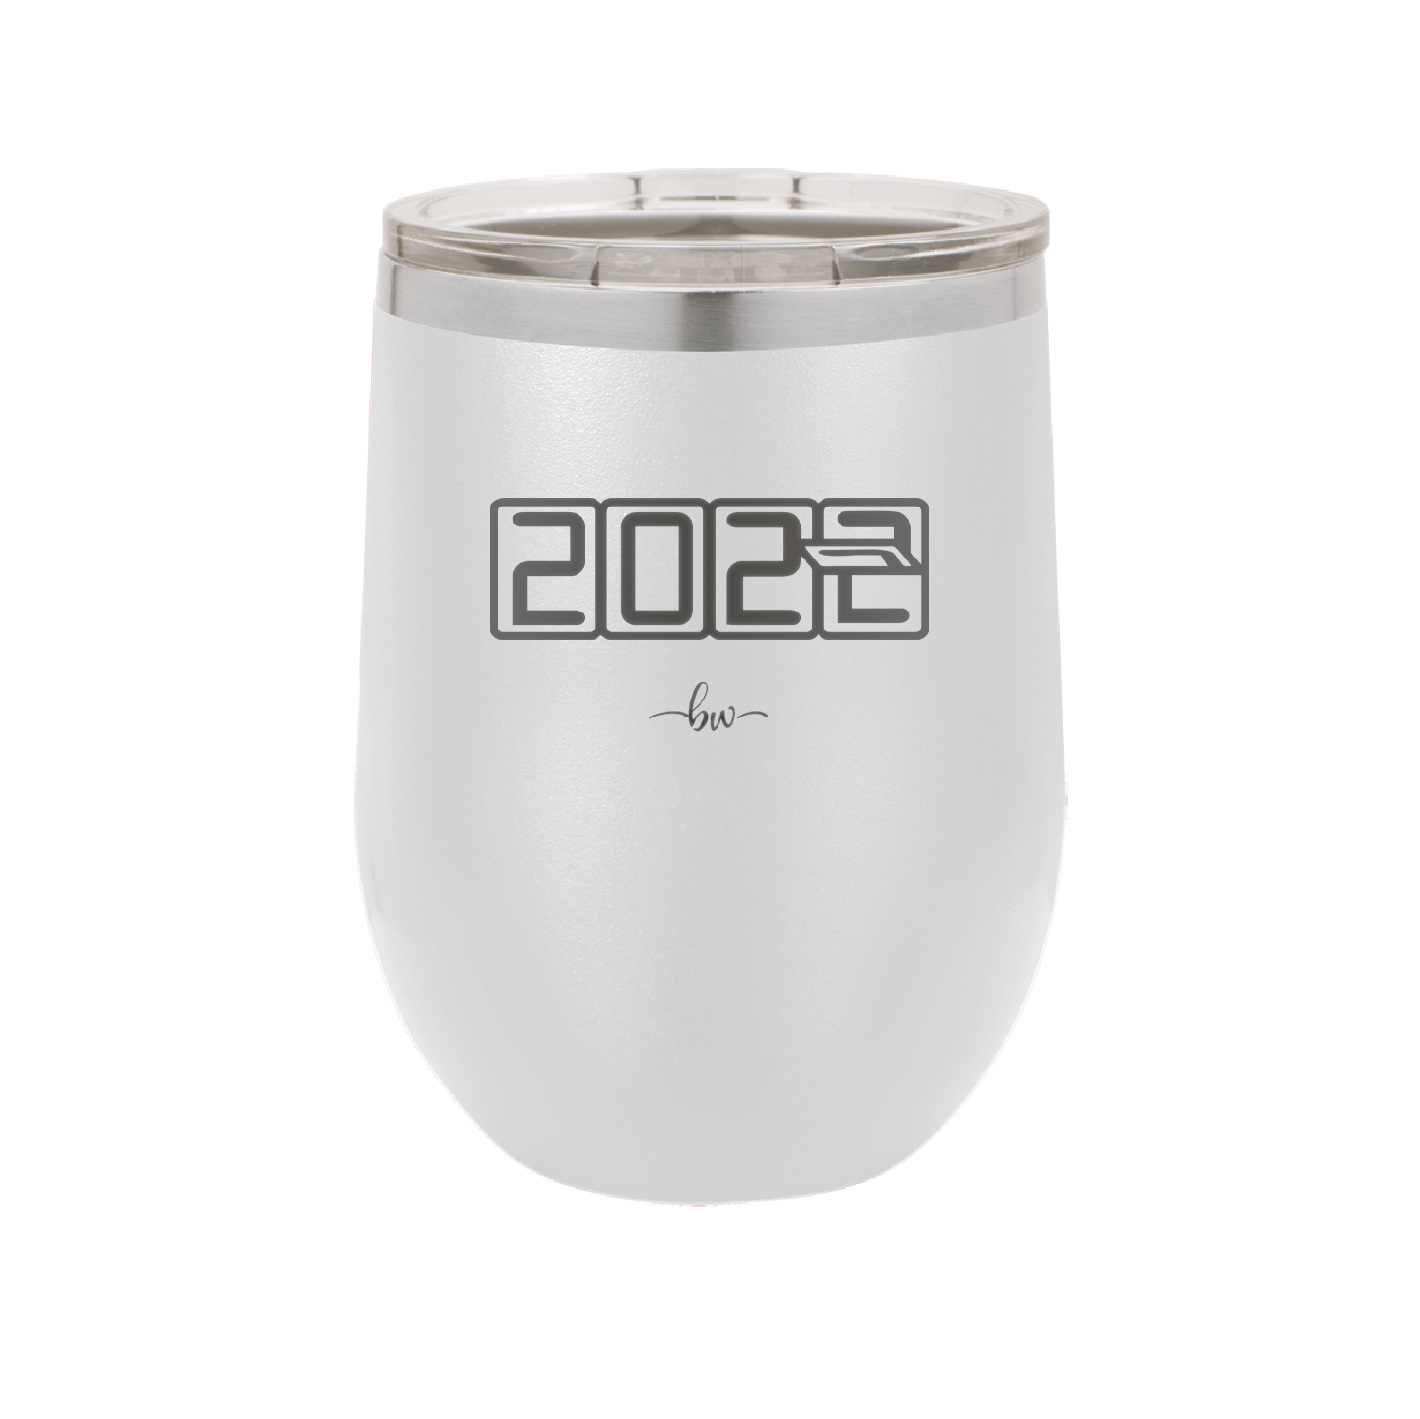 12 oz wine cup 2023 countdown-  white